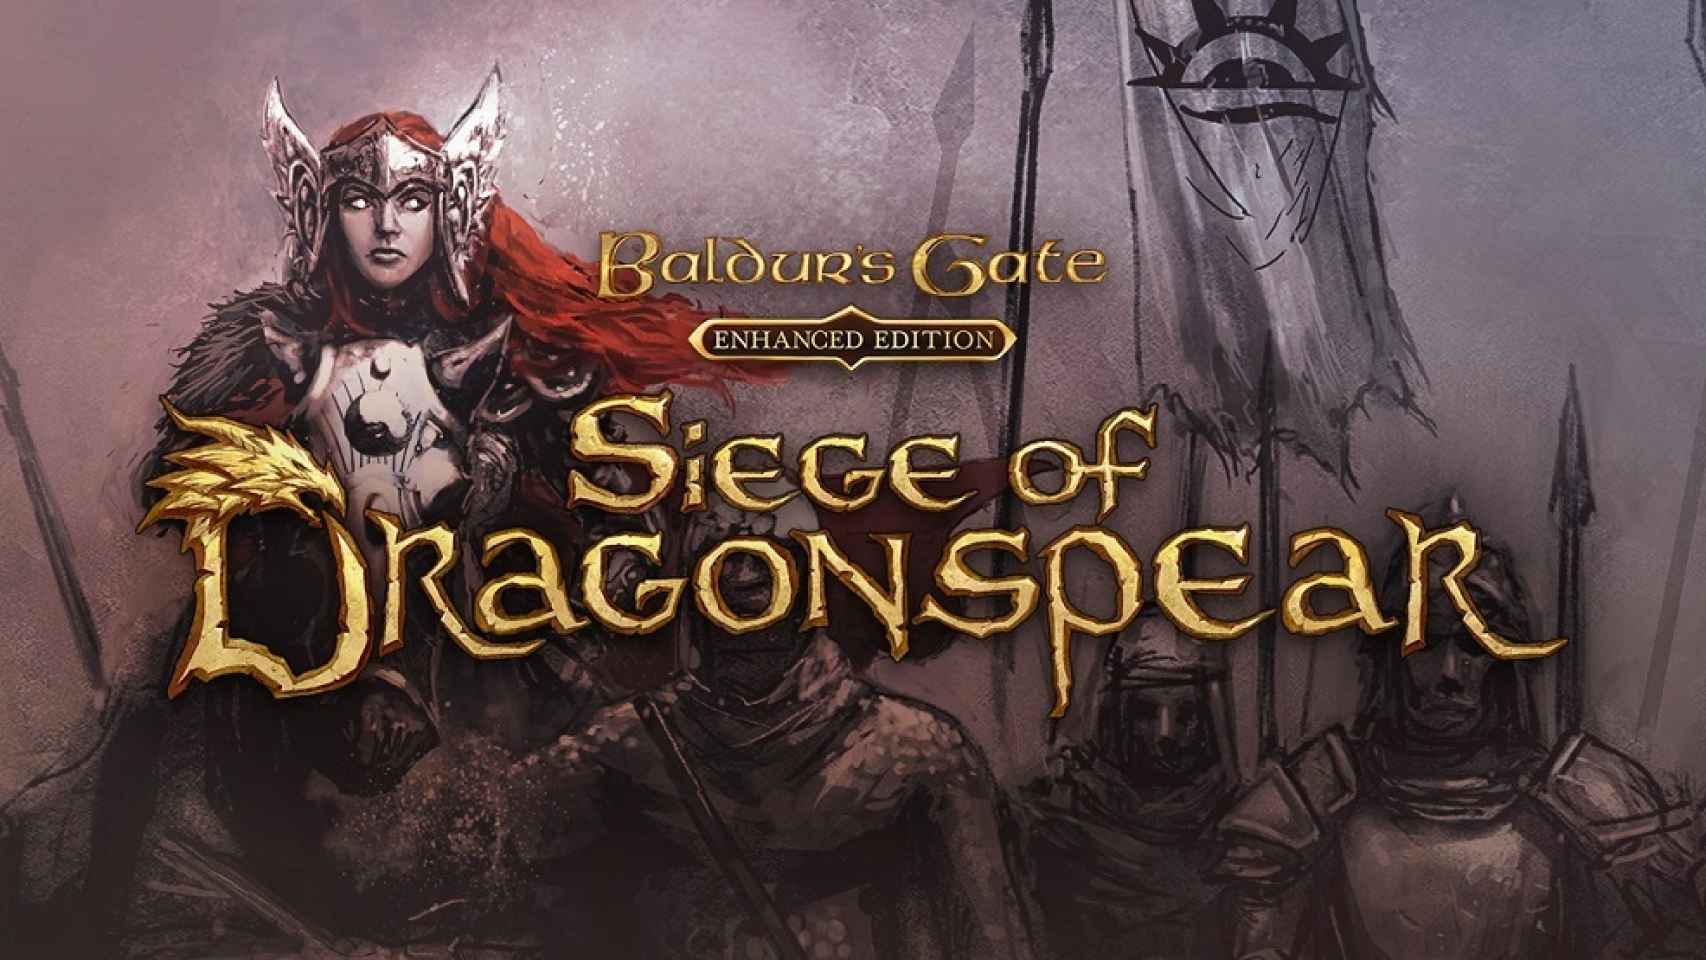 Vive una aventura épica en tu Android con Baldur’s Gate, Siege of Dragonspear